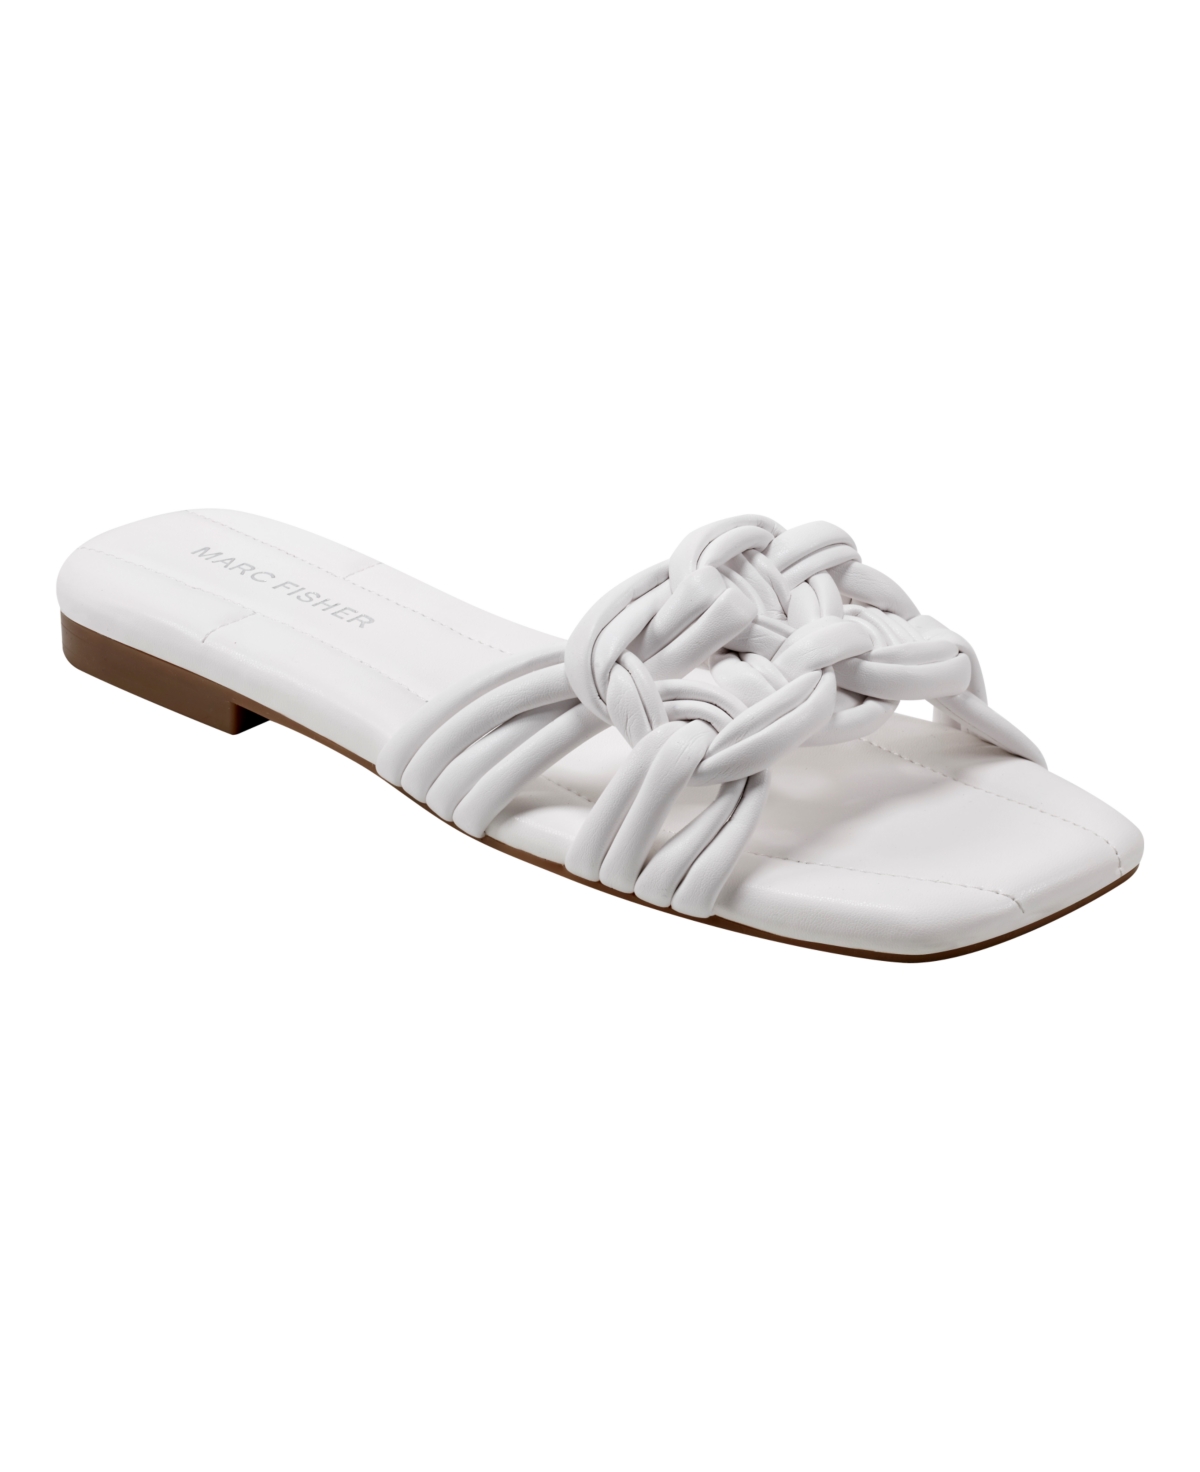 Women's Lartie Slip-On Casual Flat Sandals - White